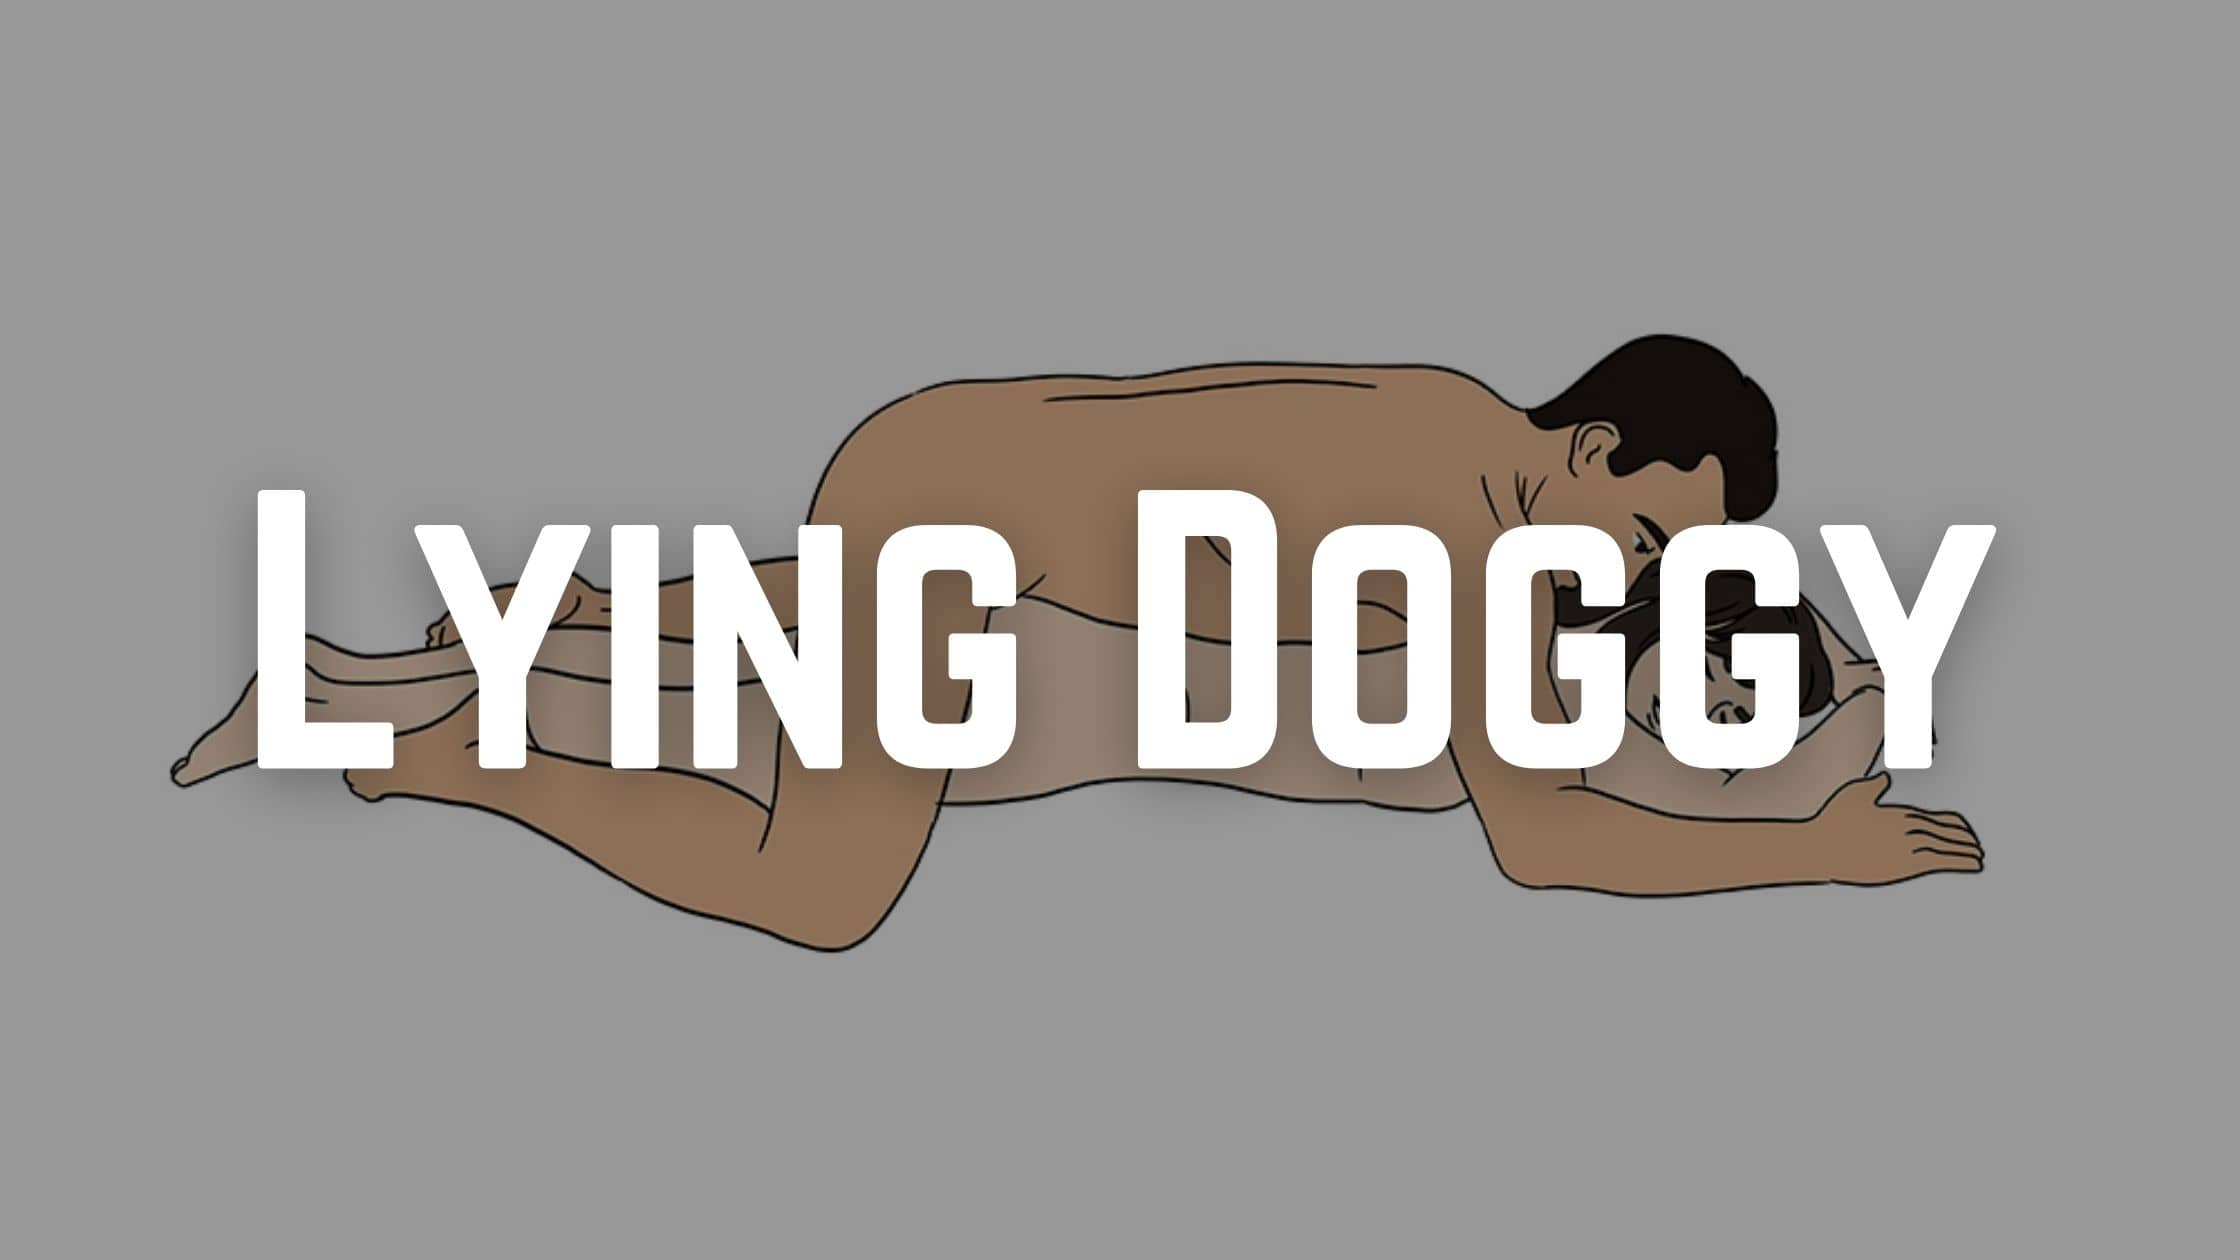 Lying Doggy